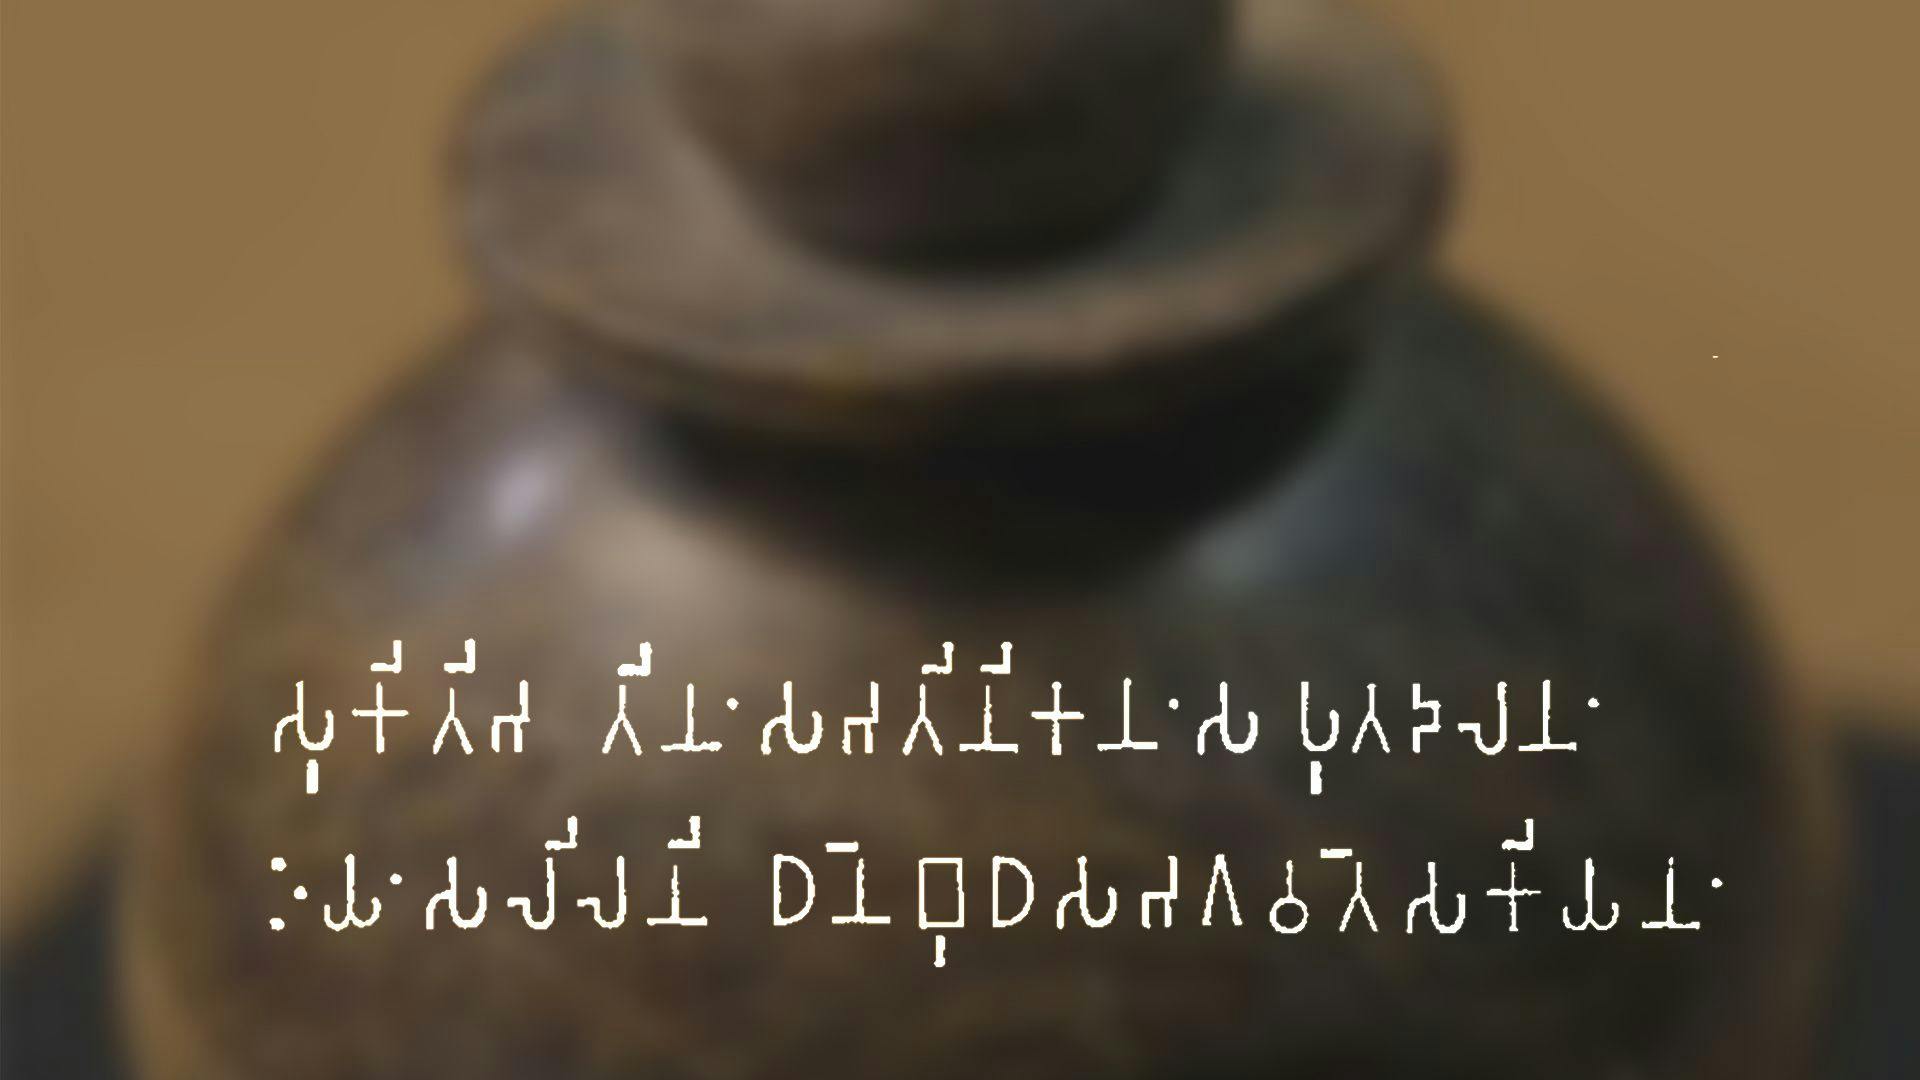 The Brahmi inscription on the vase